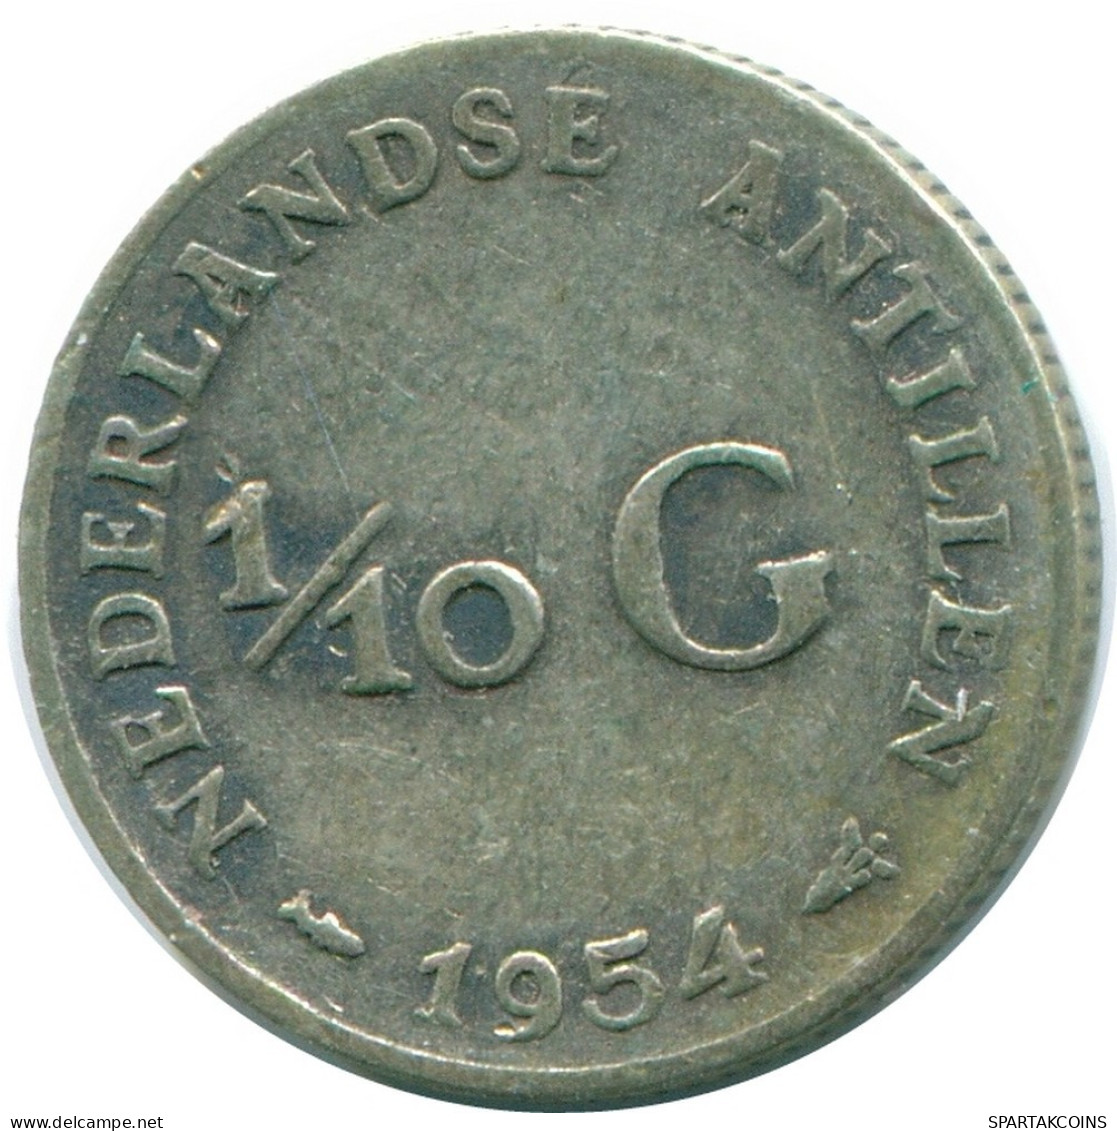 1/10 GULDEN 1954 NIEDERLÄNDISCHE ANTILLEN SILBER Koloniale Münze #NL12045.3.D.A - Netherlands Antilles